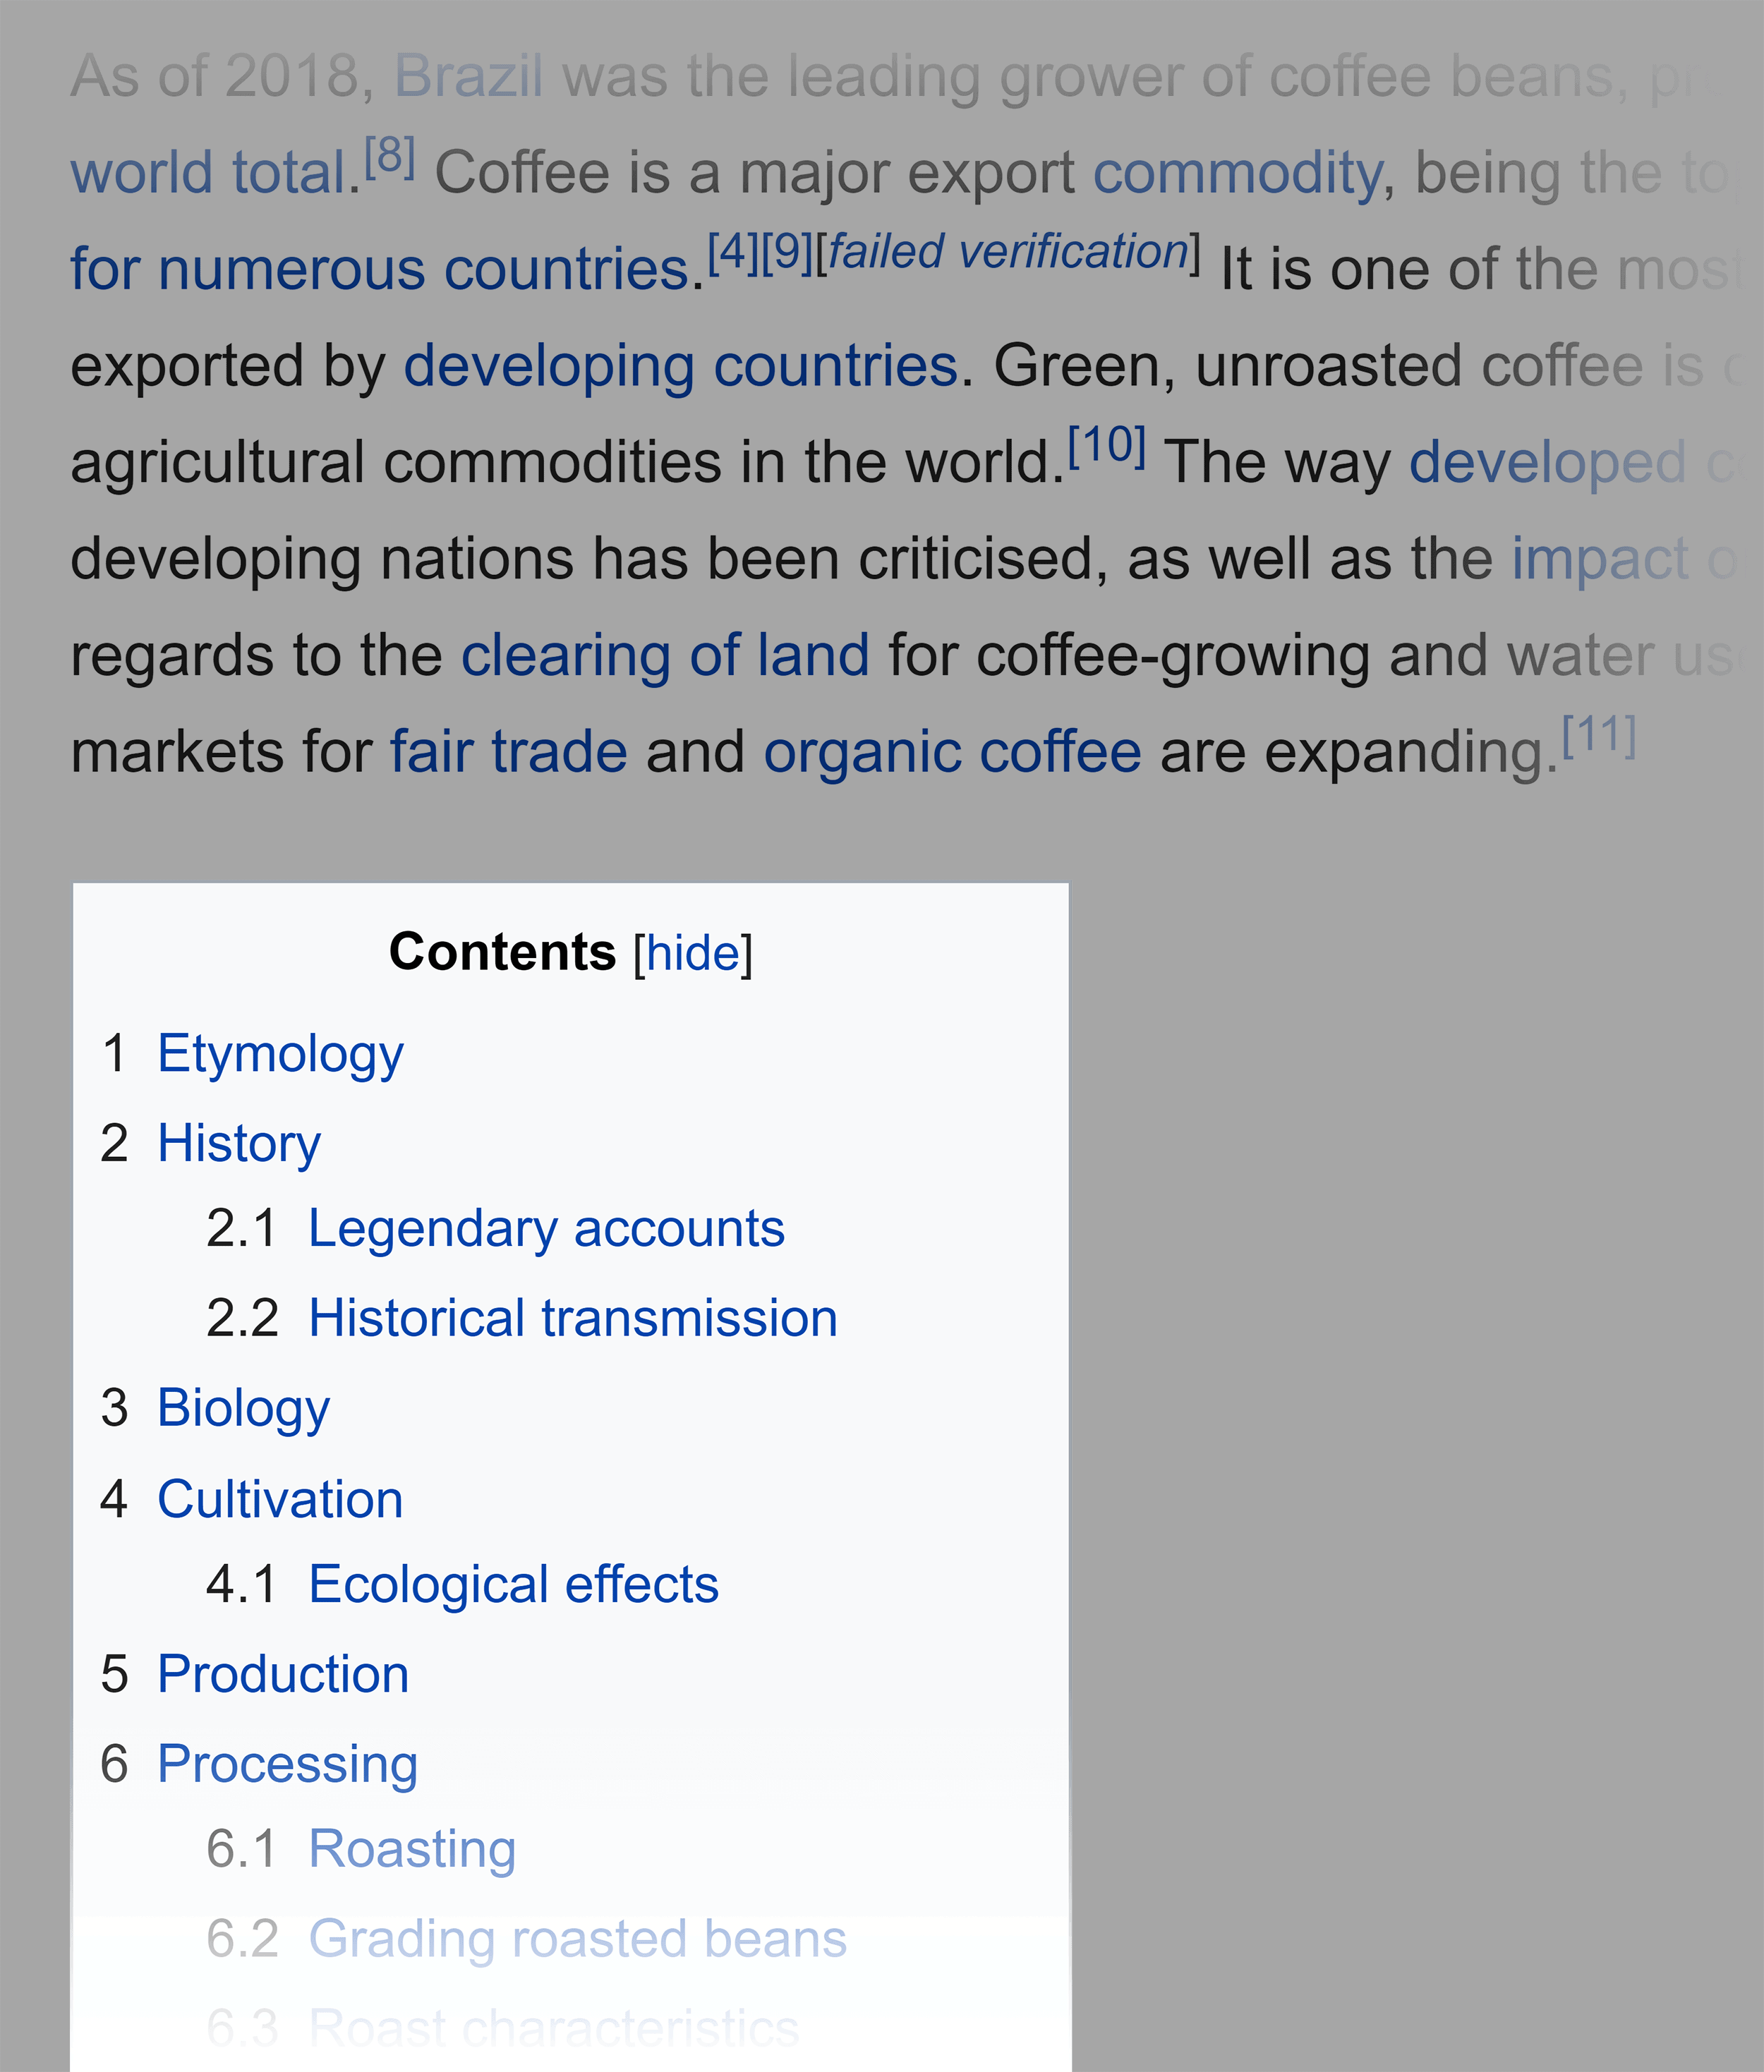 Wikipedia – Contents